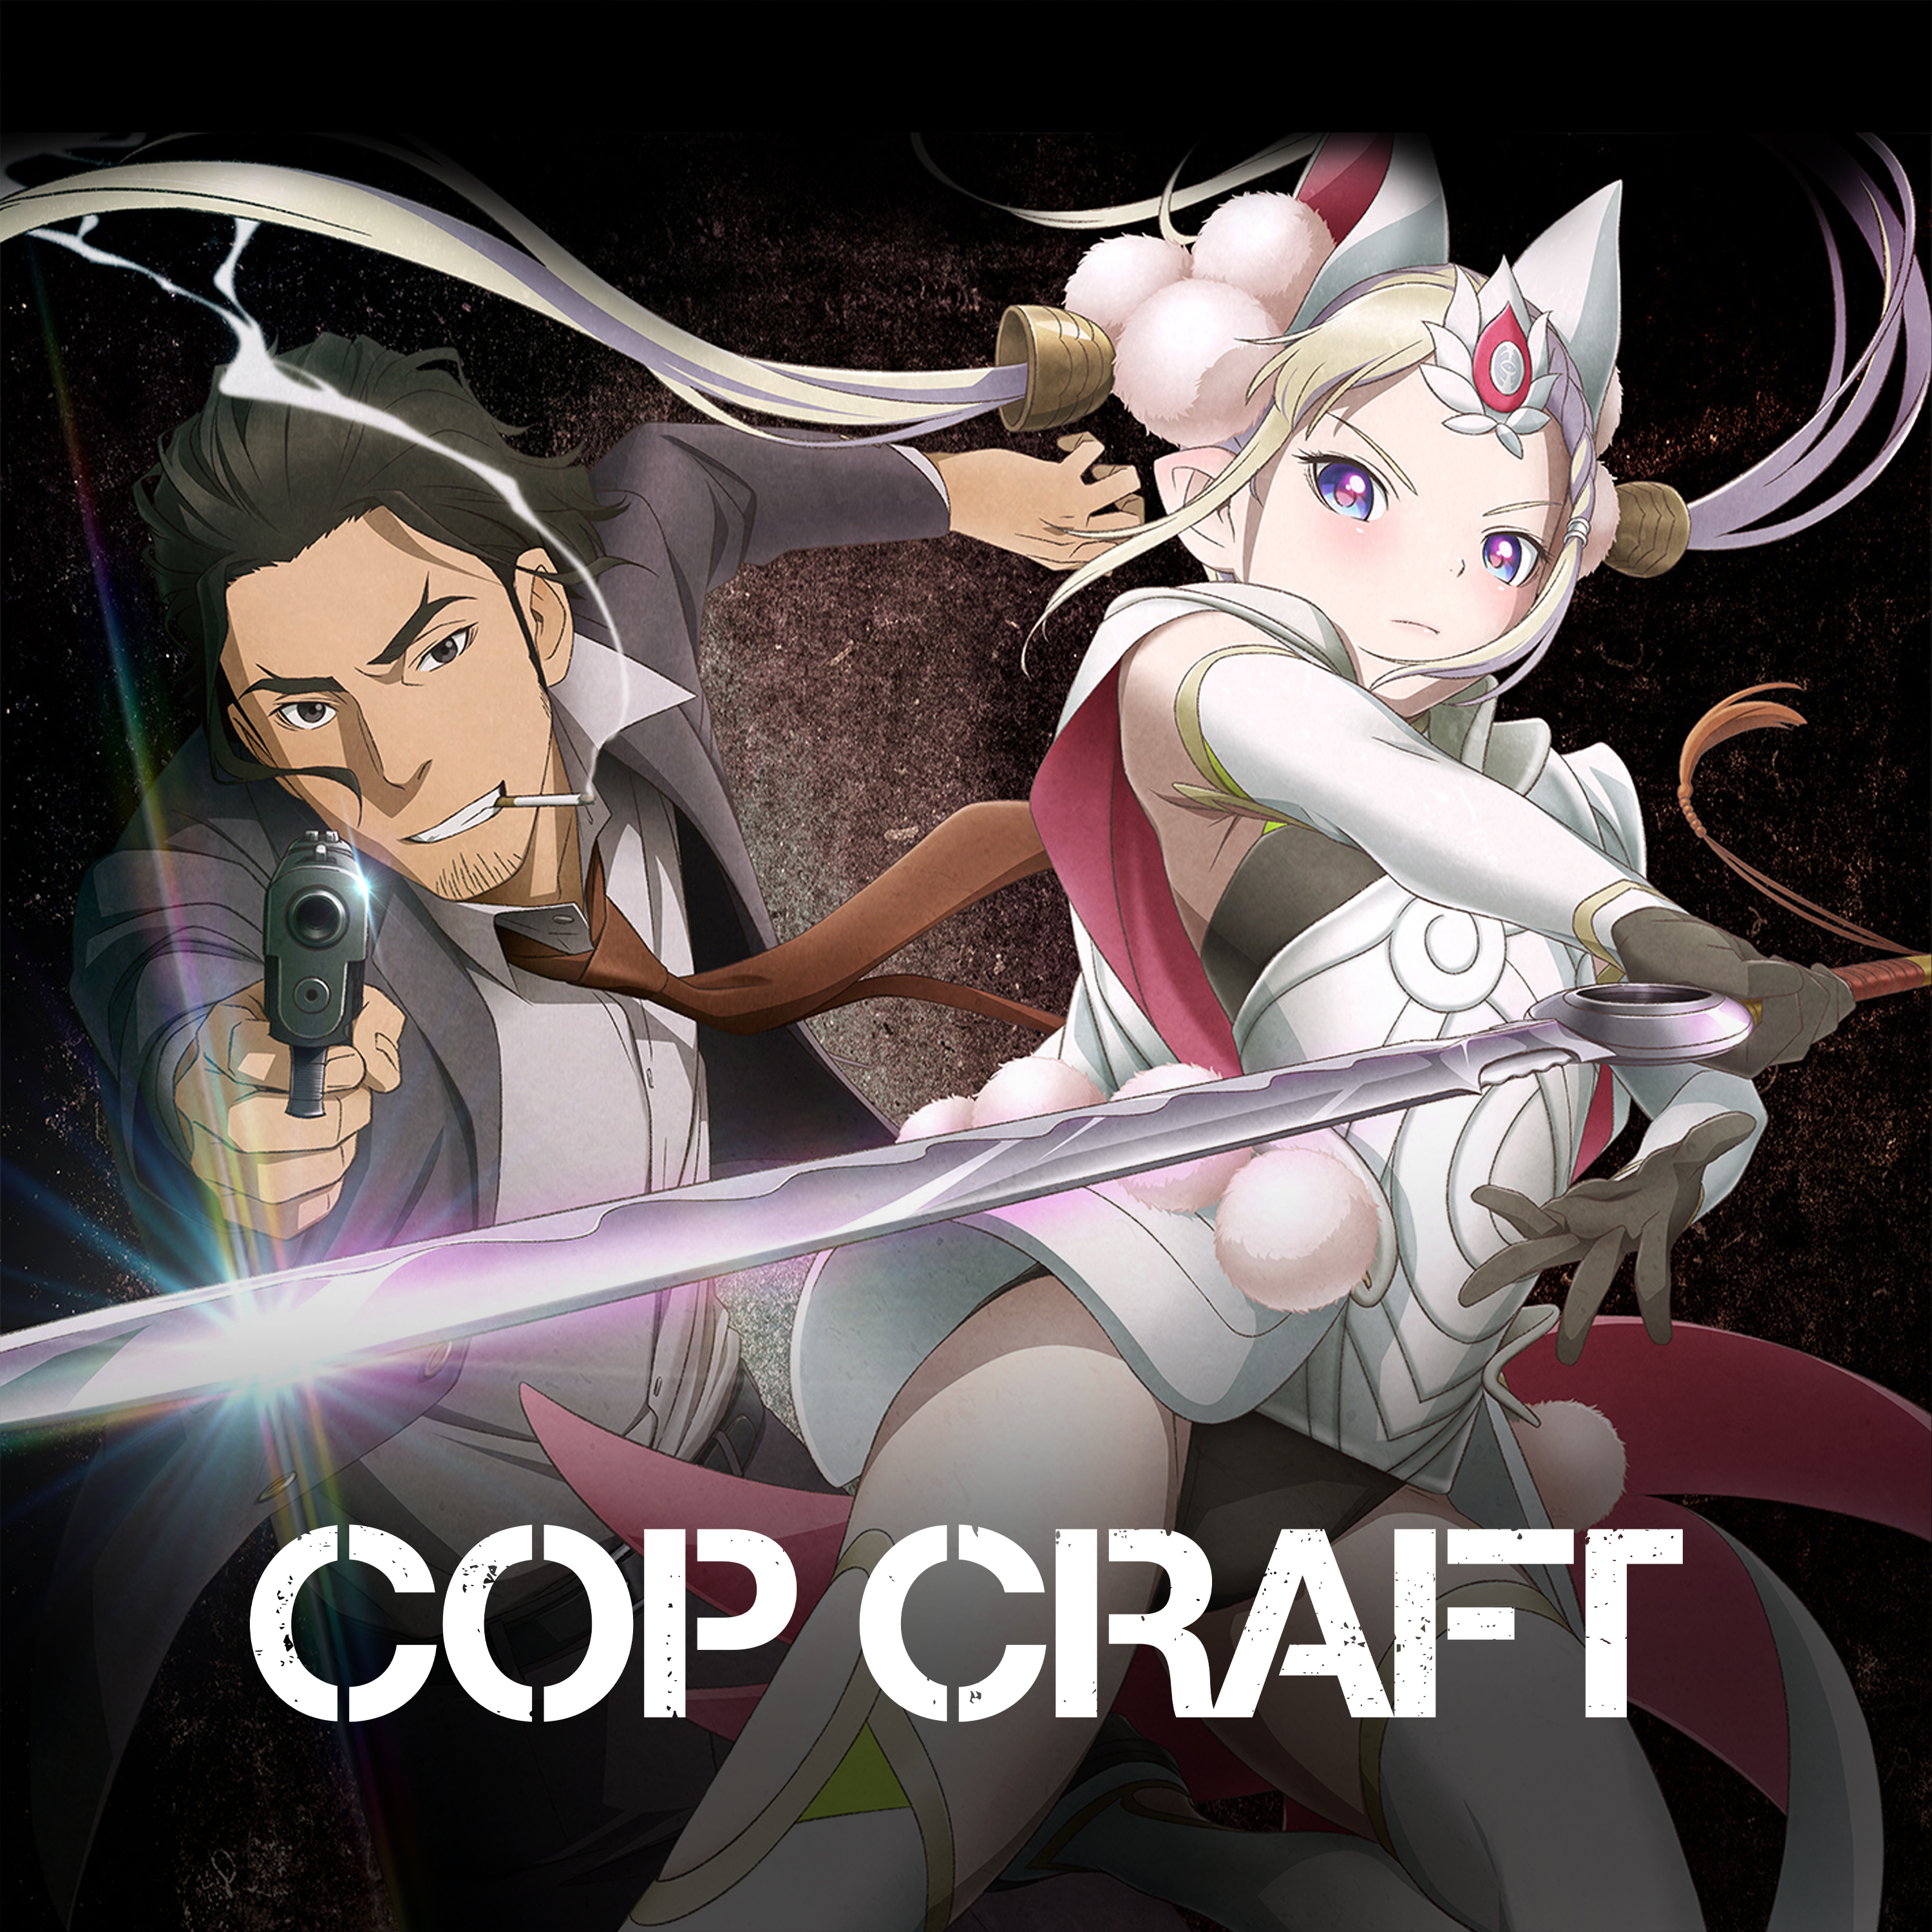 Watch Cop Craft Sub Dub Action Adventure Fantasy Sci Fi Anime Funimation